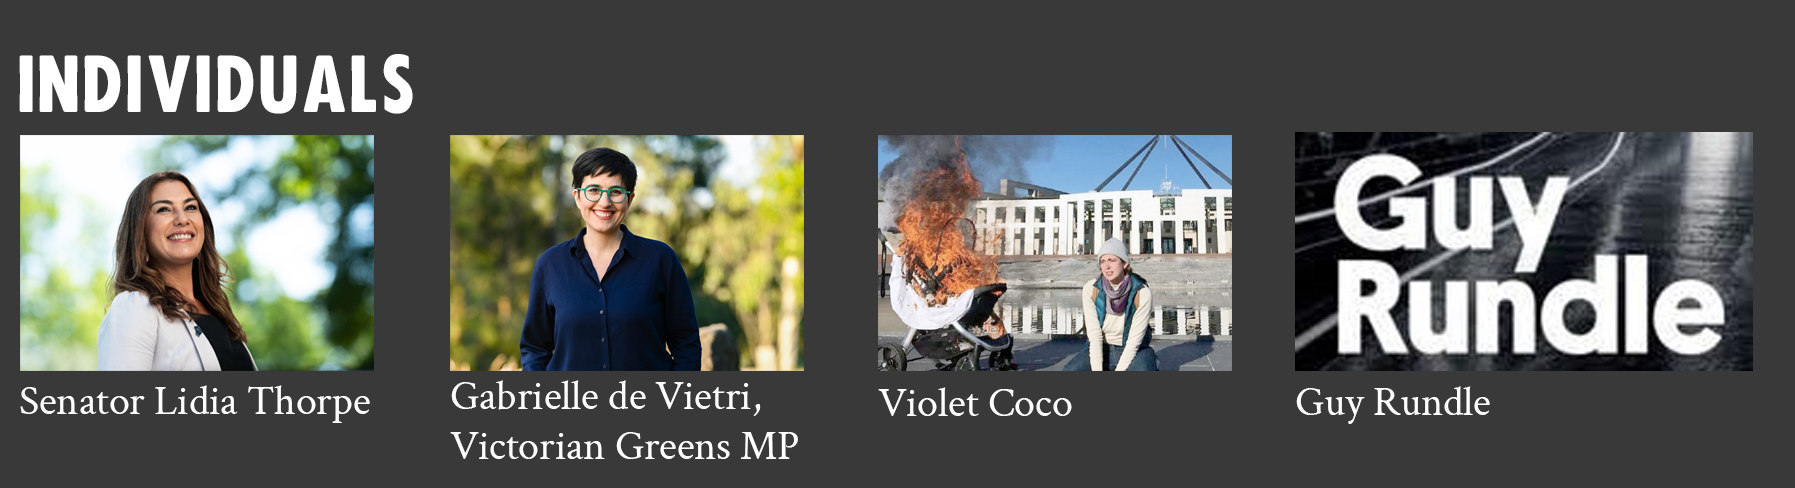 Endorsements by individuals: Senator Lidia Thorpe, Gabrielle de Vietri Victorian Greens MP, Violet Coco, Guy Rundle